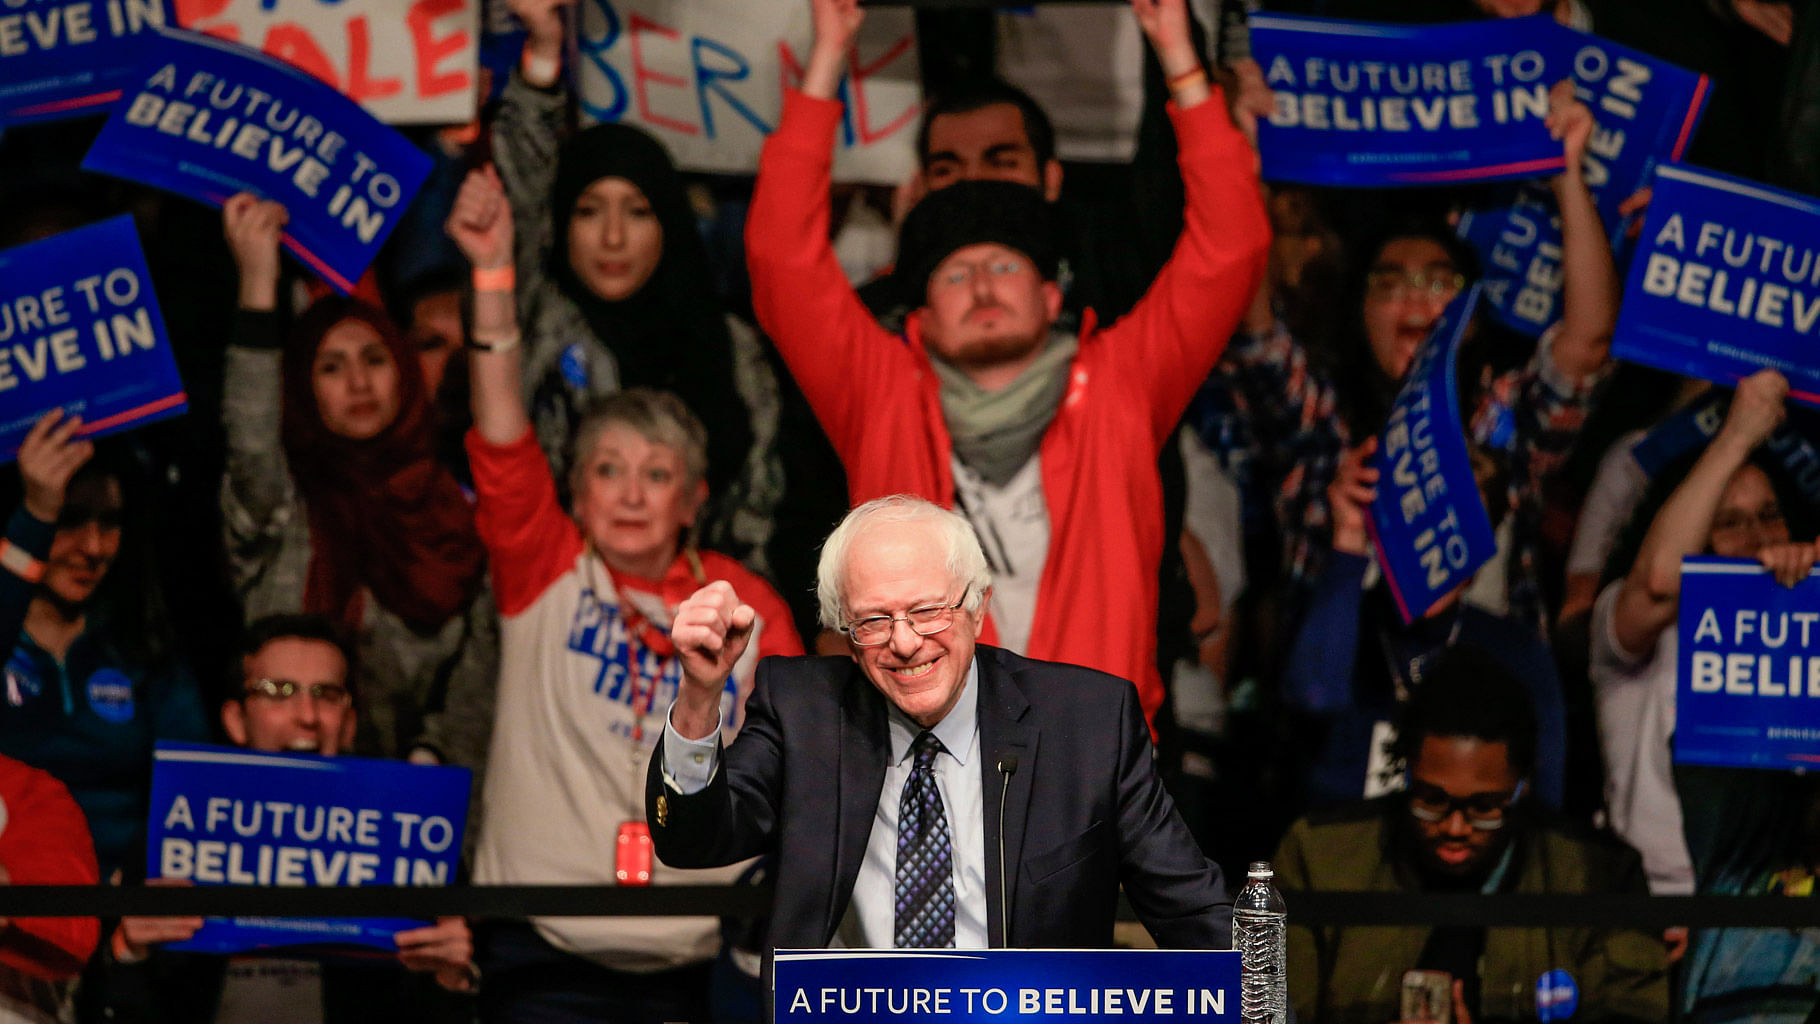 

Democratic presidential candidate, Sen. Bernie Sanders, speaks at an election rally in Lincoln, Nebraska, 3 March 2016. (Photo: AP)